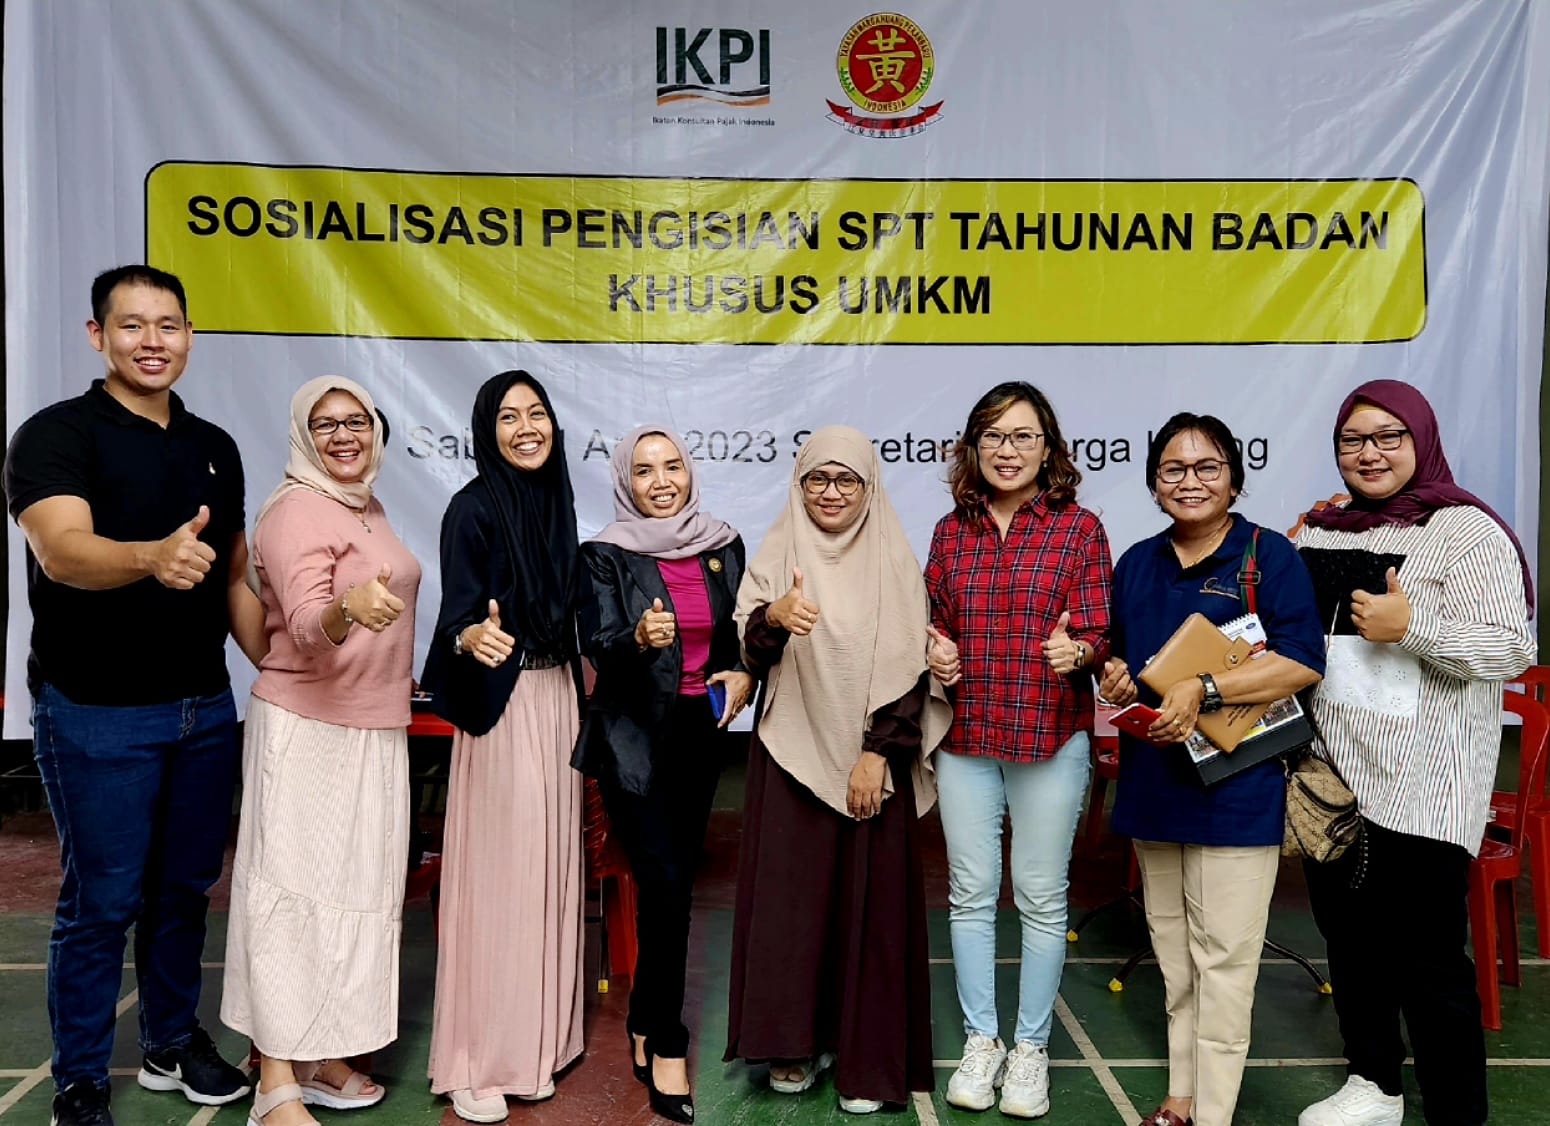 IKPI Pekanbaru Bersama IKBMH Gelar Sosialisasi Pengisian SPT UMKM